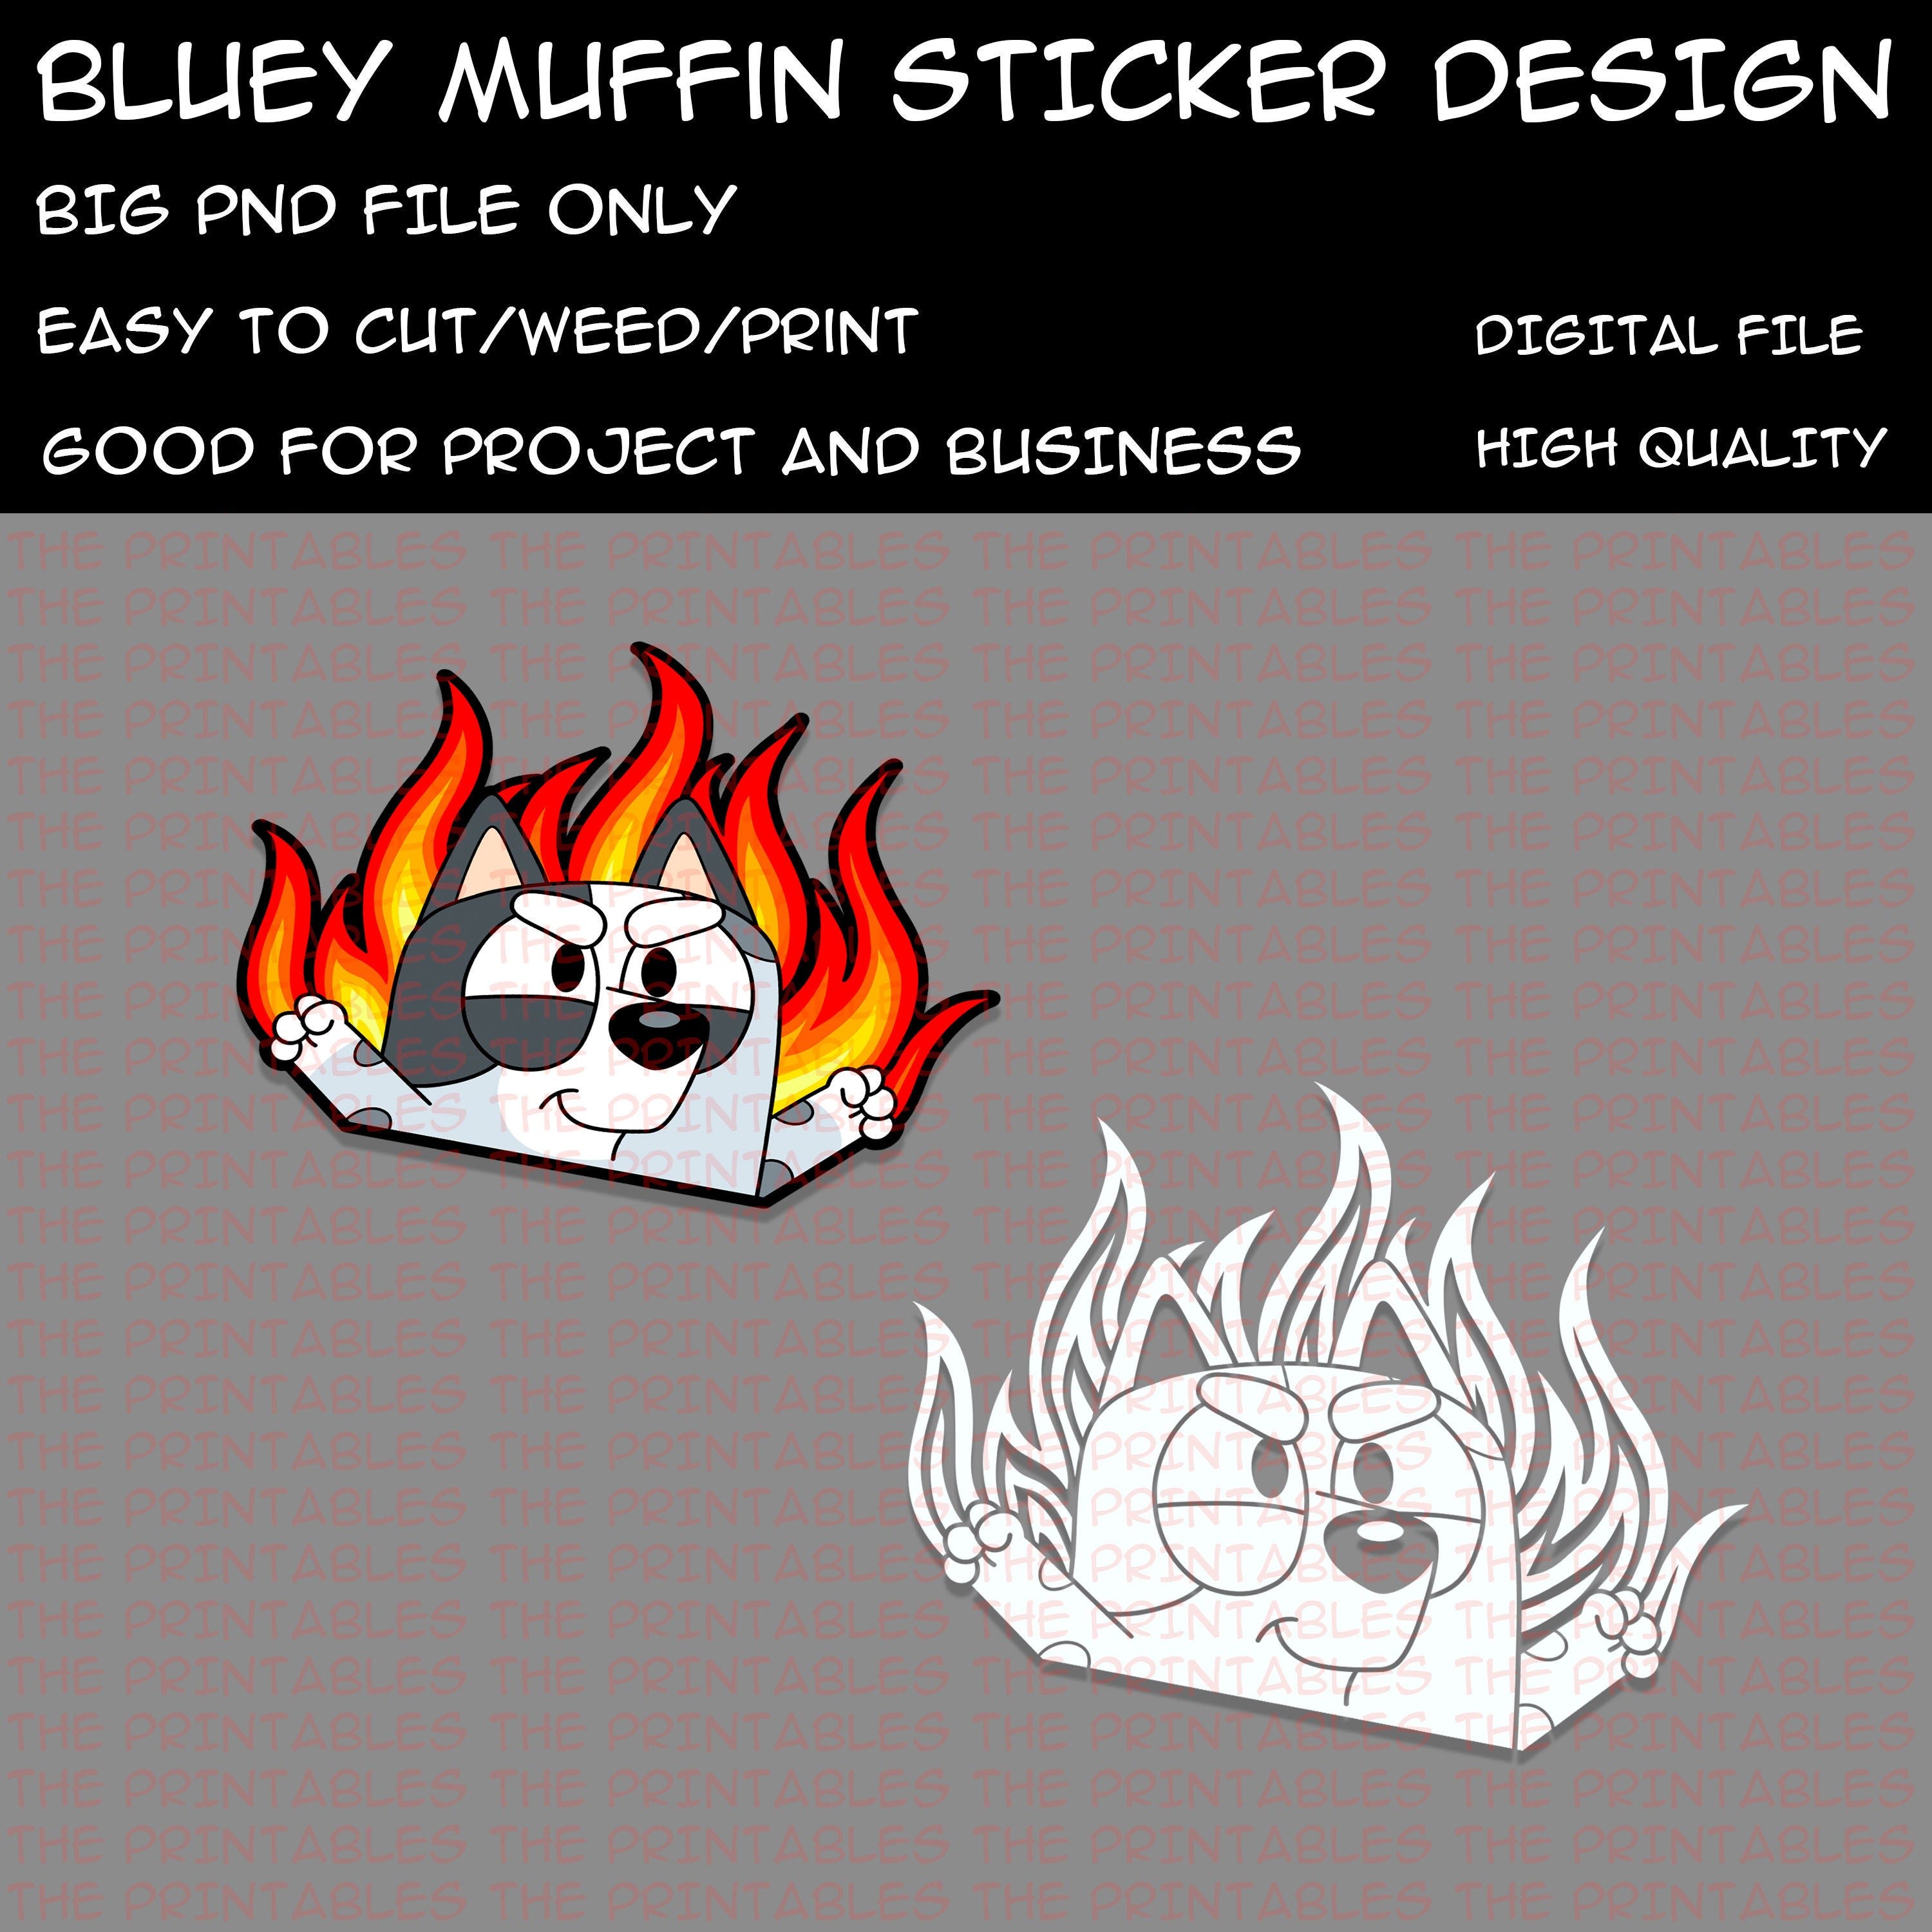 Bluey Muffin Sticker Design Digital File